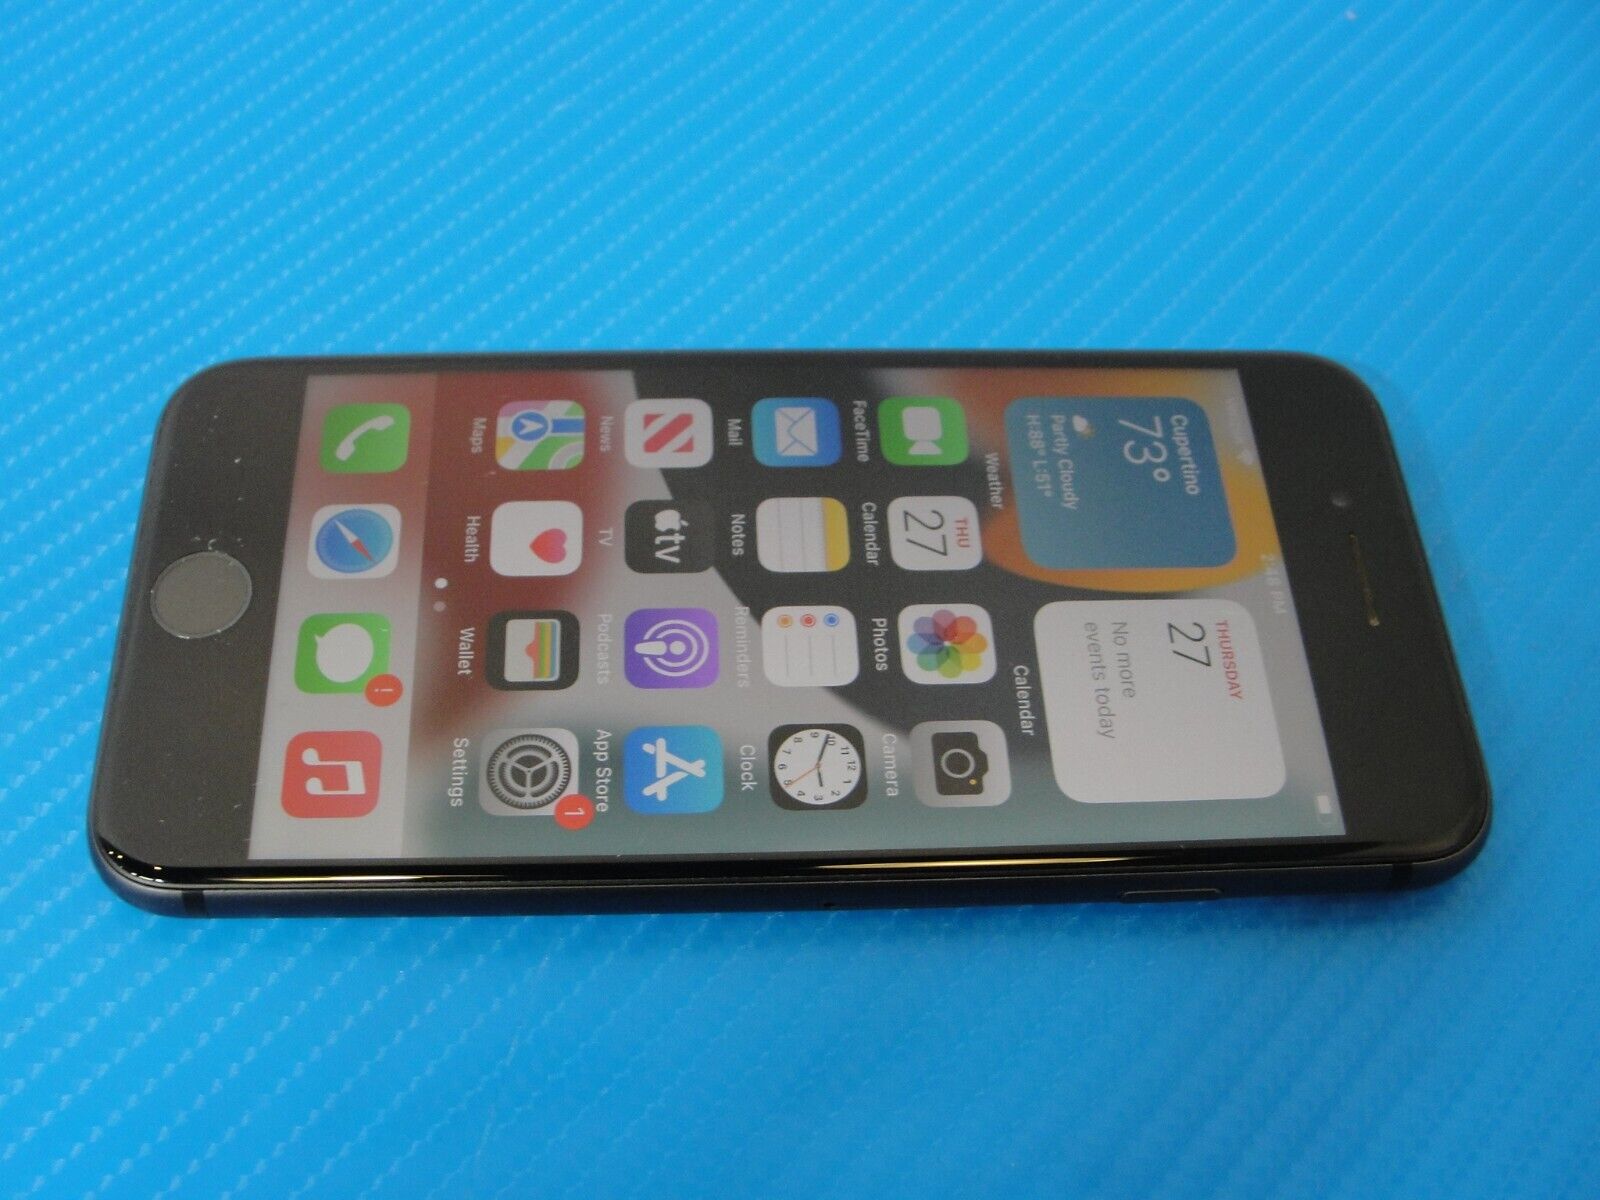 Apple iPhone 8 - 64GB - Black - Verizon clean ESN - Unlocked /#2